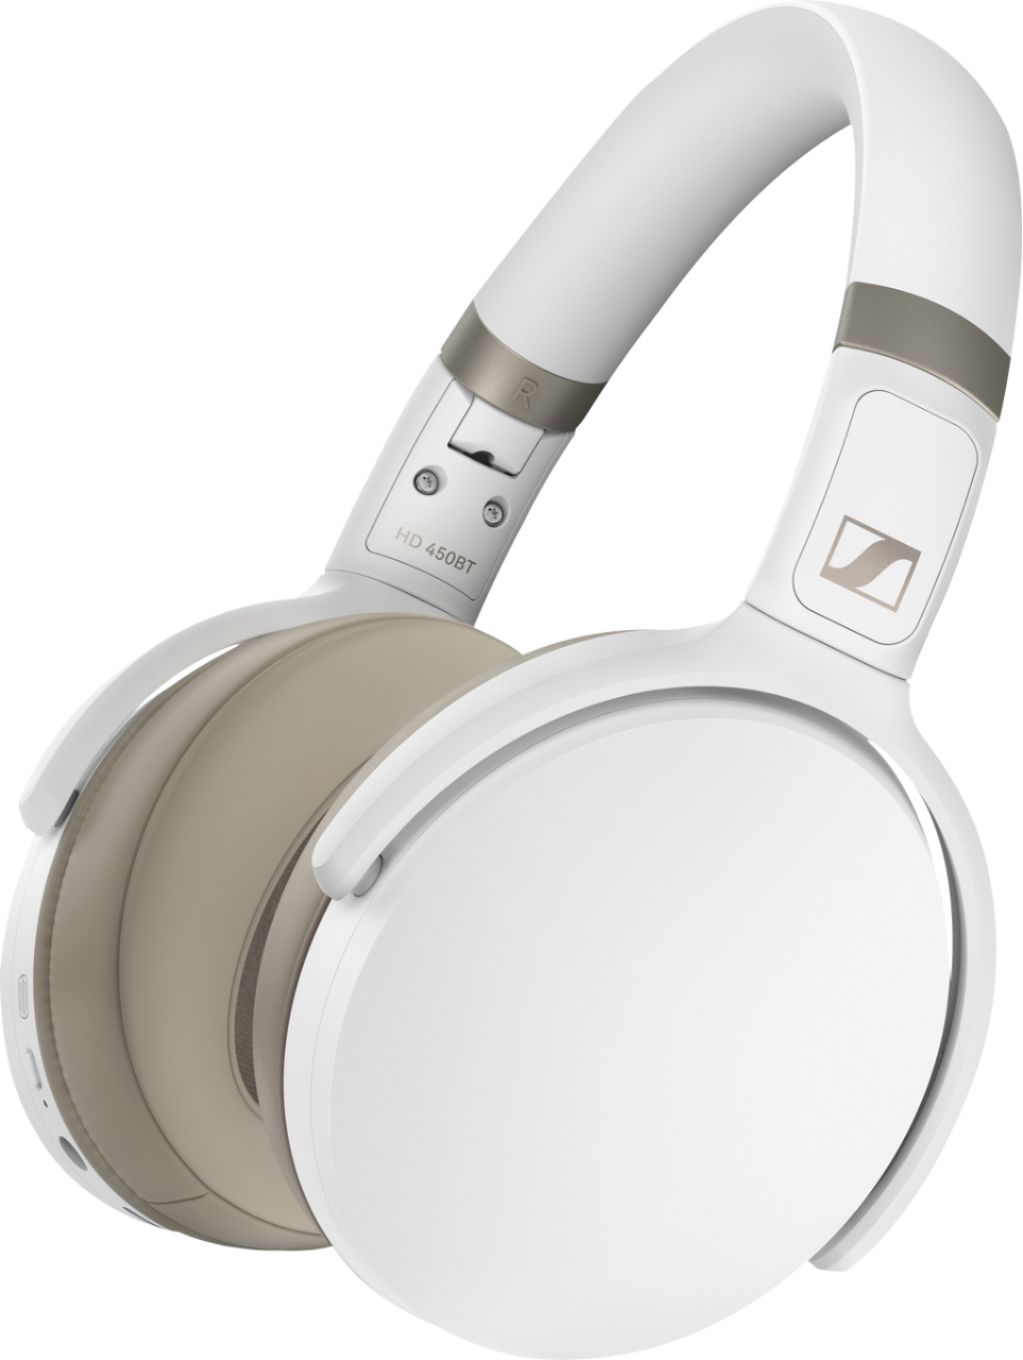 Angle View: Sennheiser - MOMENTUM Wireless Noise Canceling Over-the-Ear Headphones - Sandy White